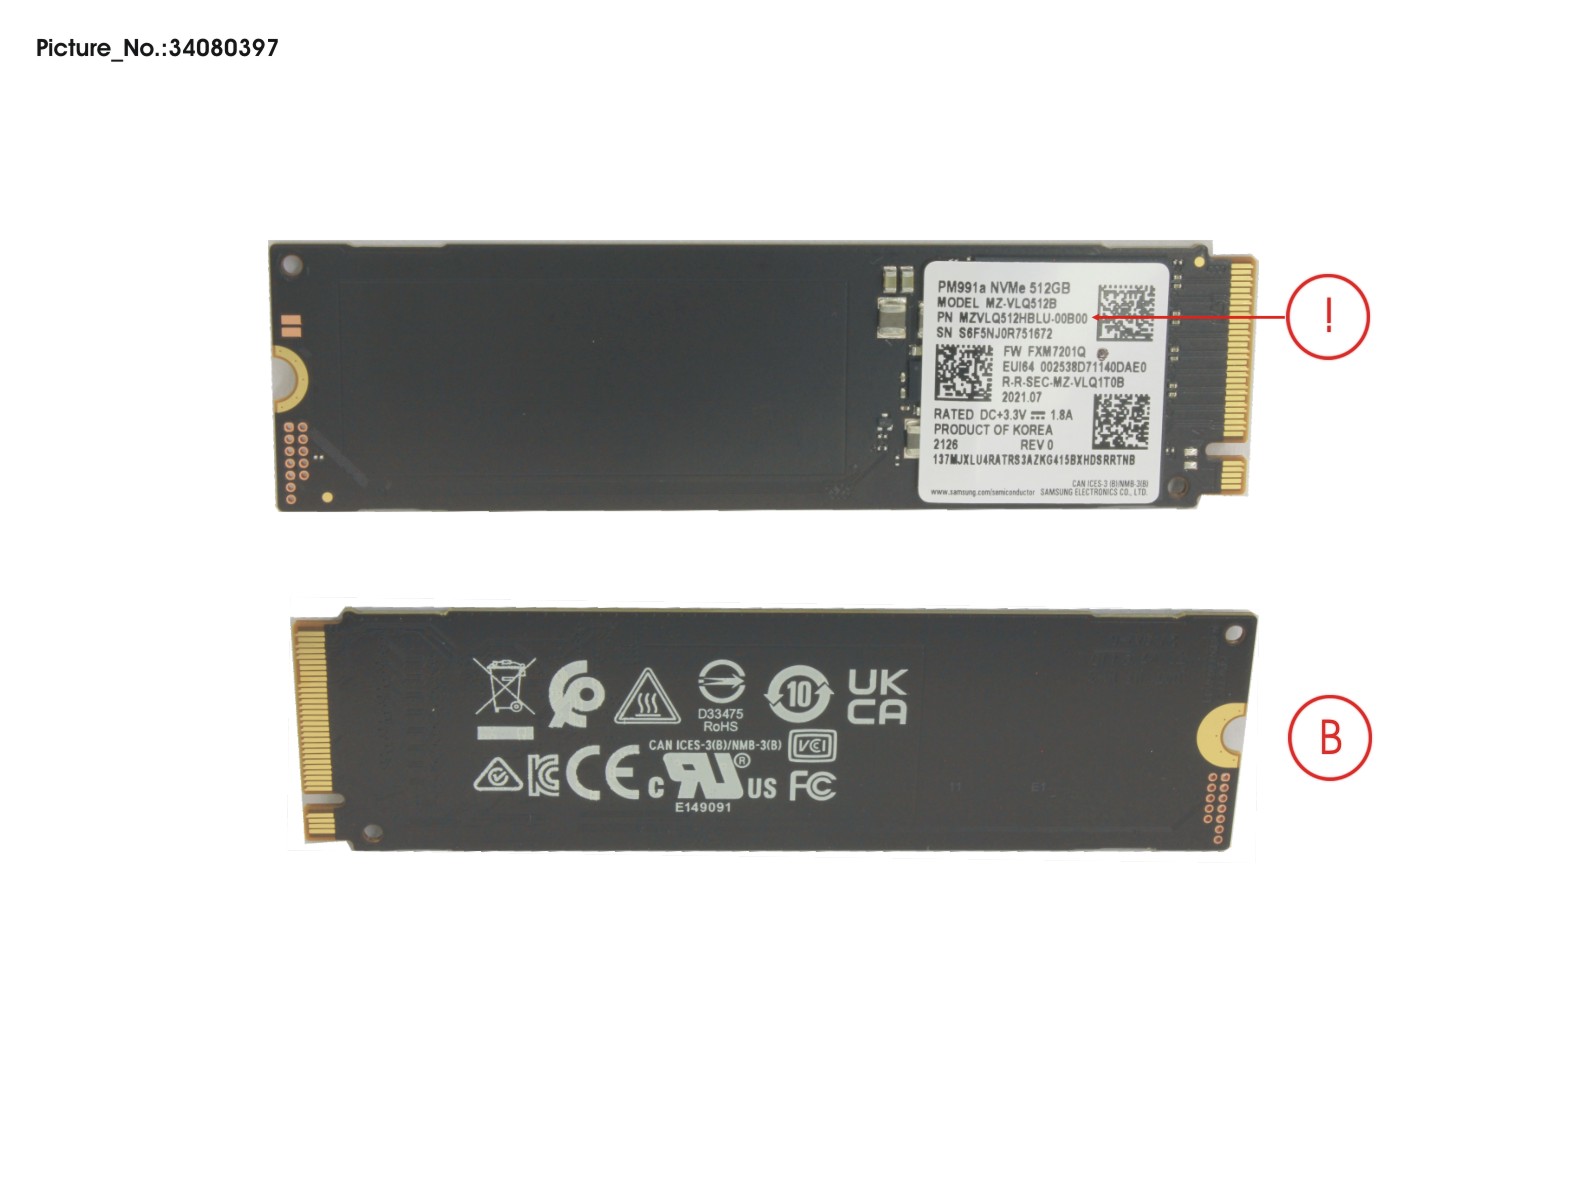 SSD PCIE M.2 2280 512GB PM991A